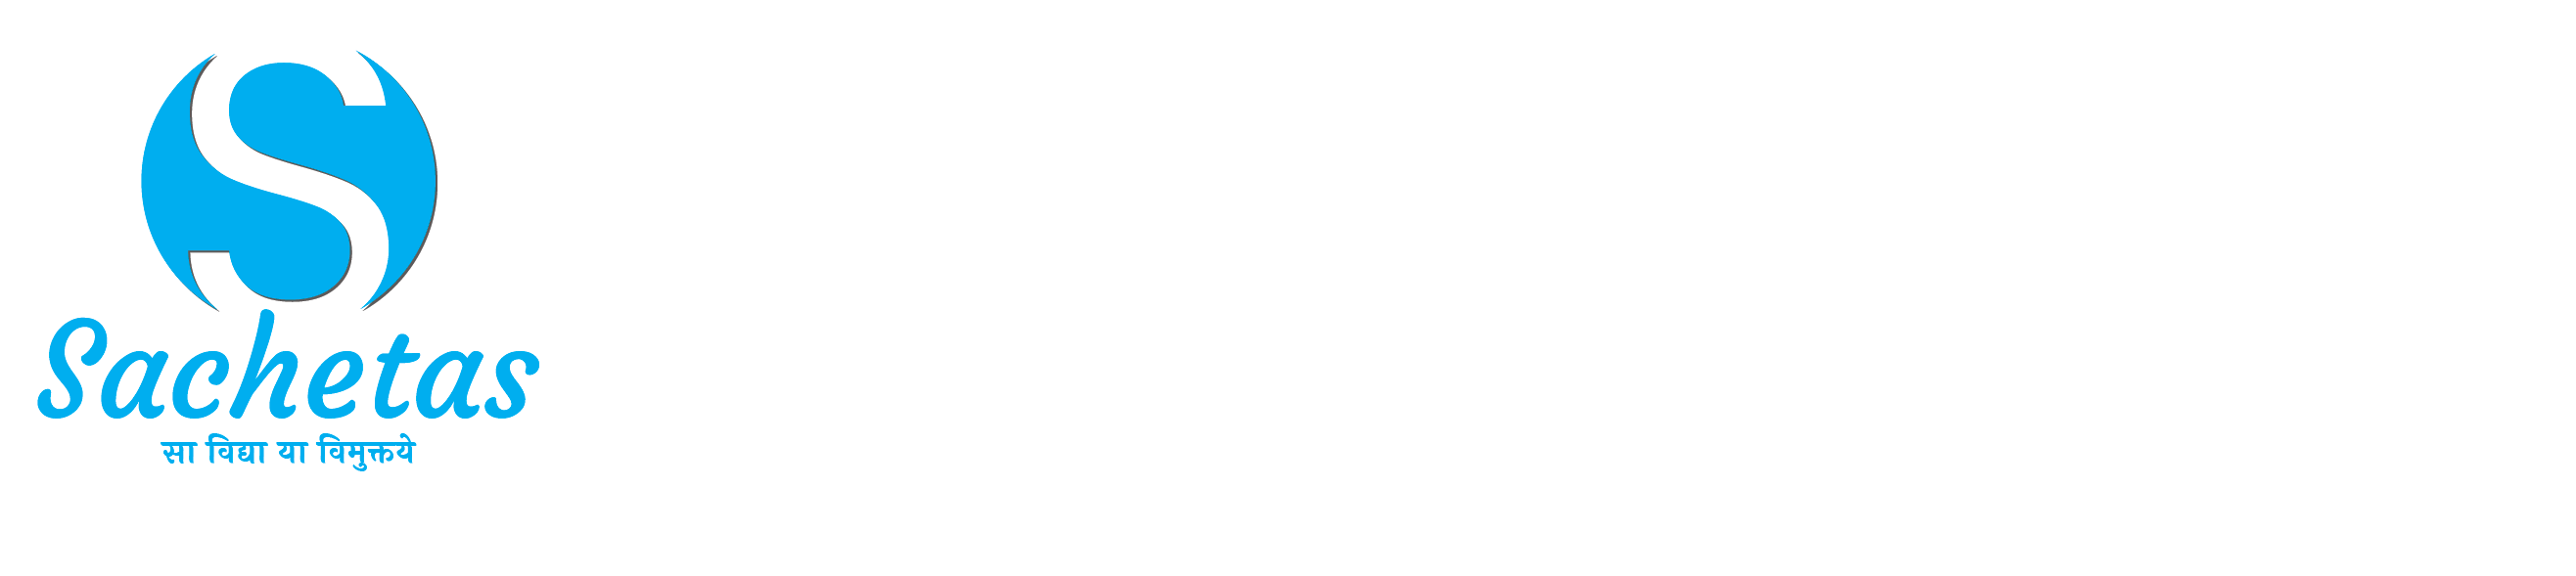 Sachetas